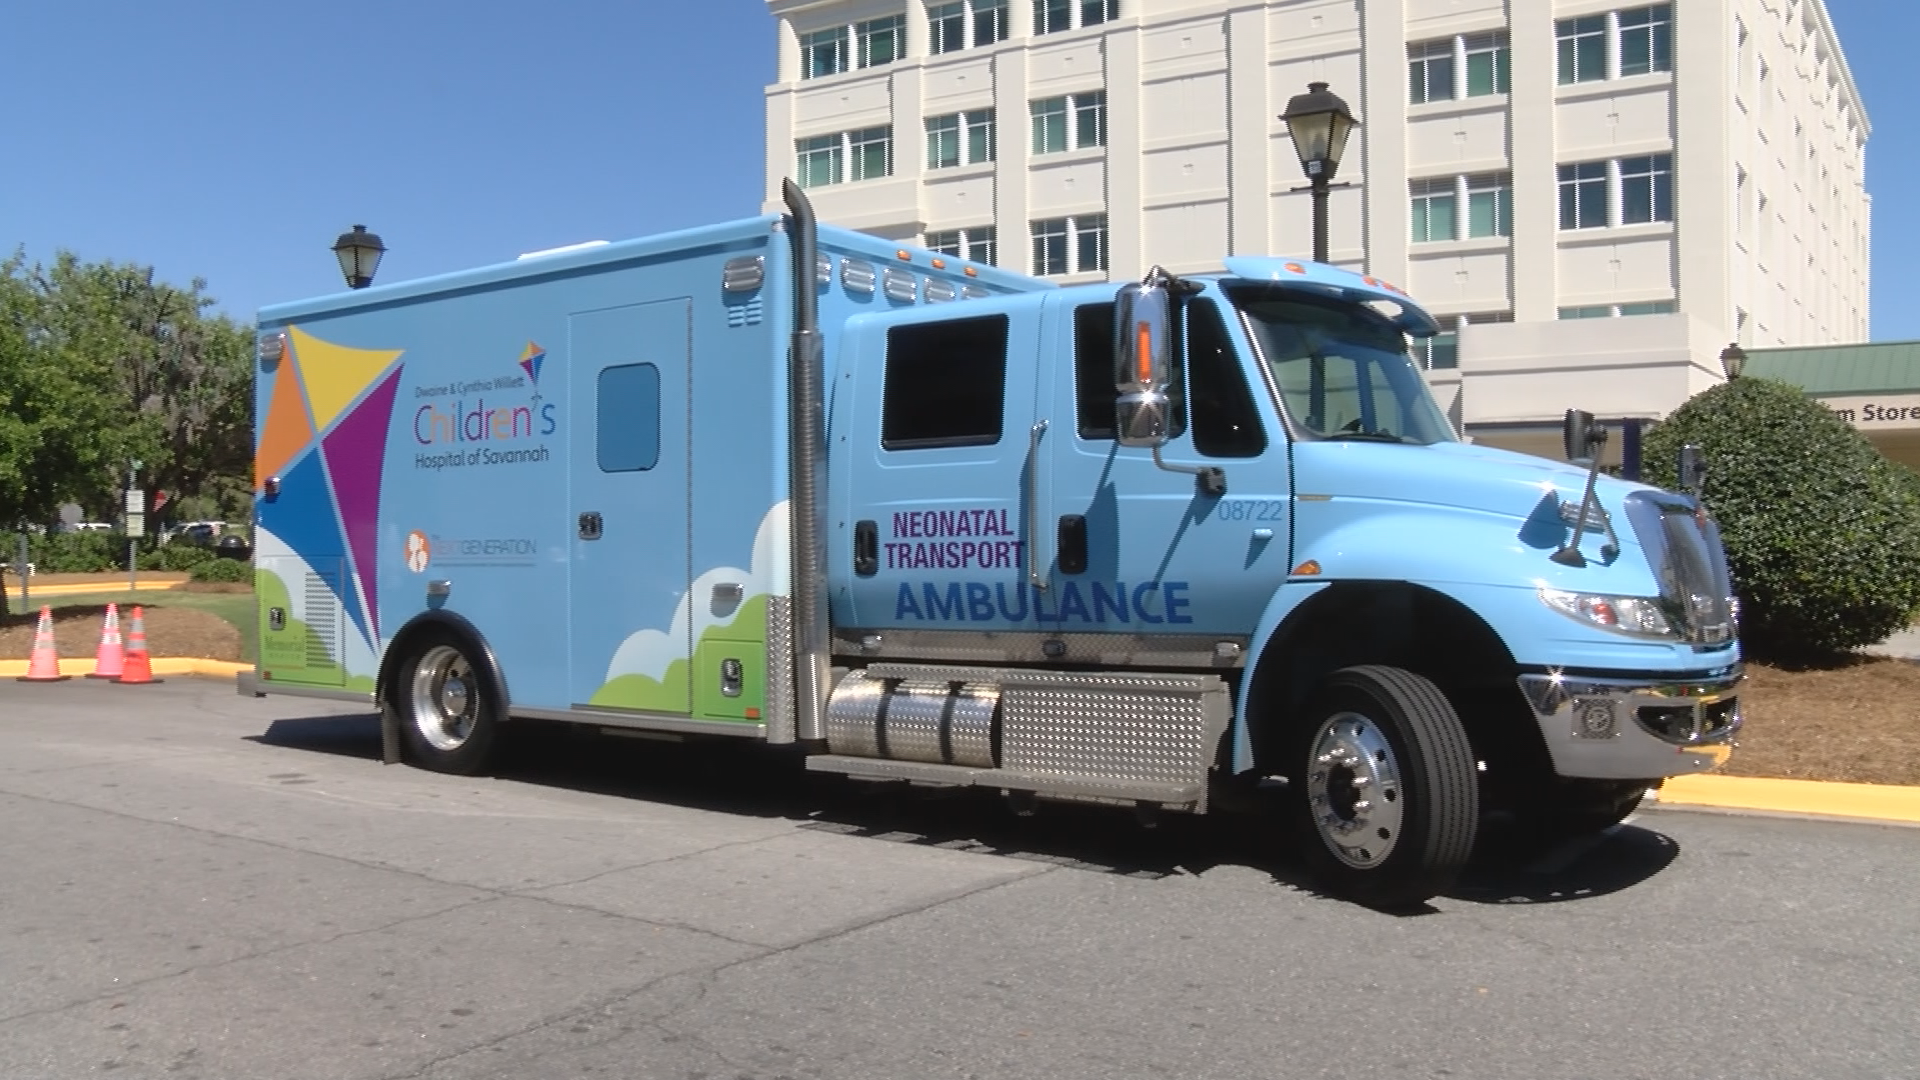 Prisma Health Children's Hospital has a new NICU ambulance